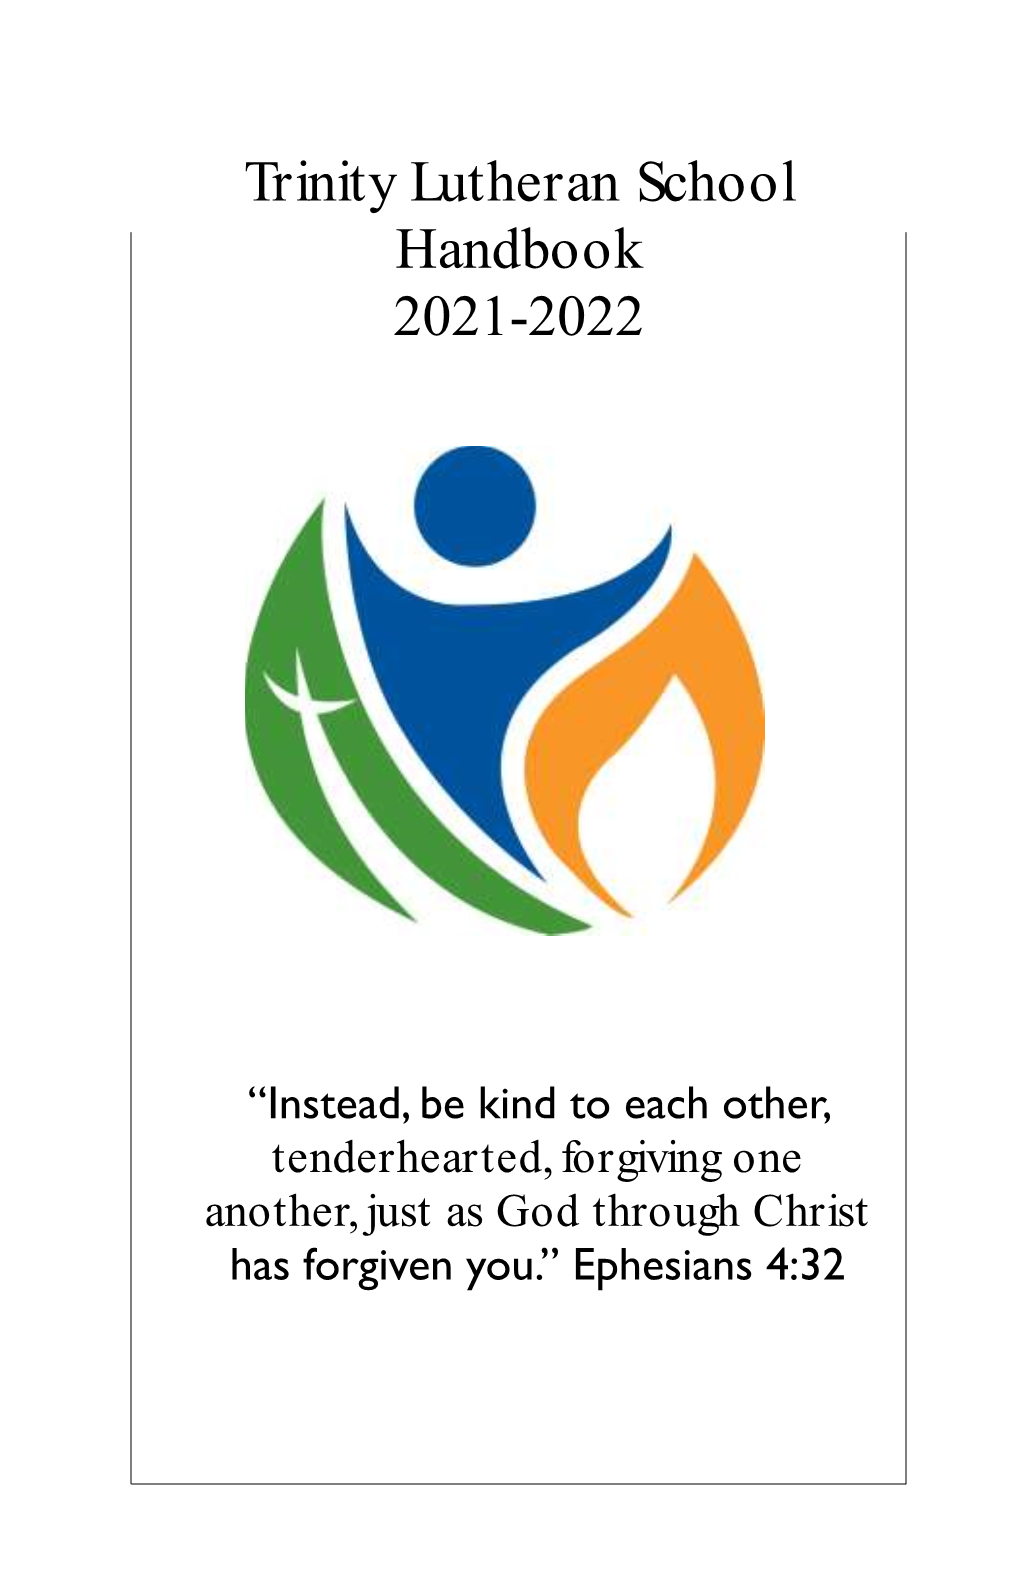 Trinity Lutheran School Handbook 2021-2022